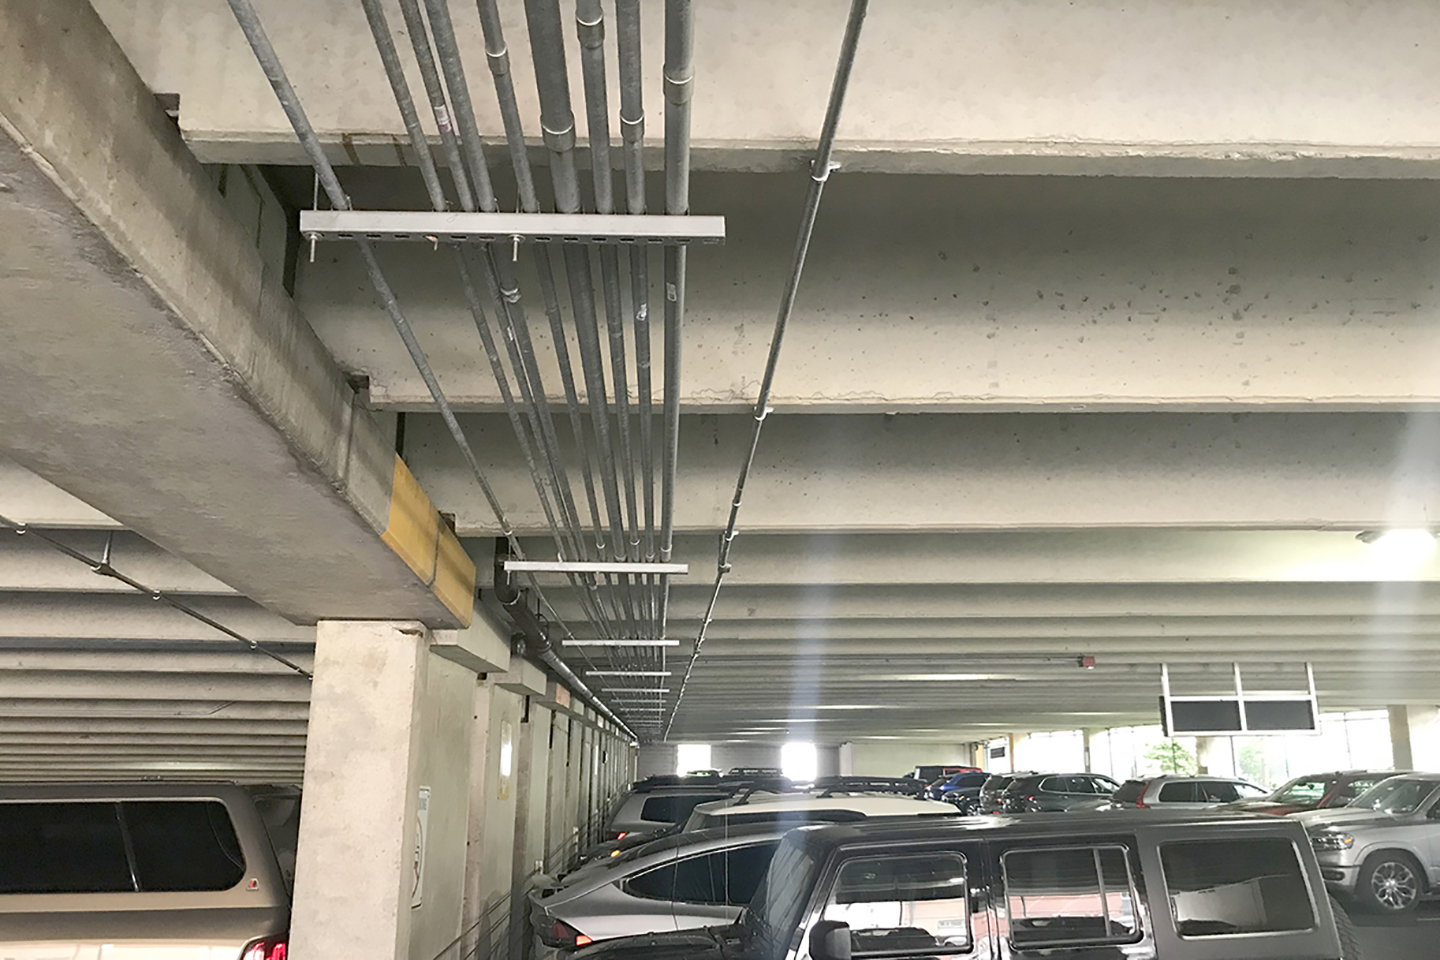 Illuminating Parking for Local Hospital